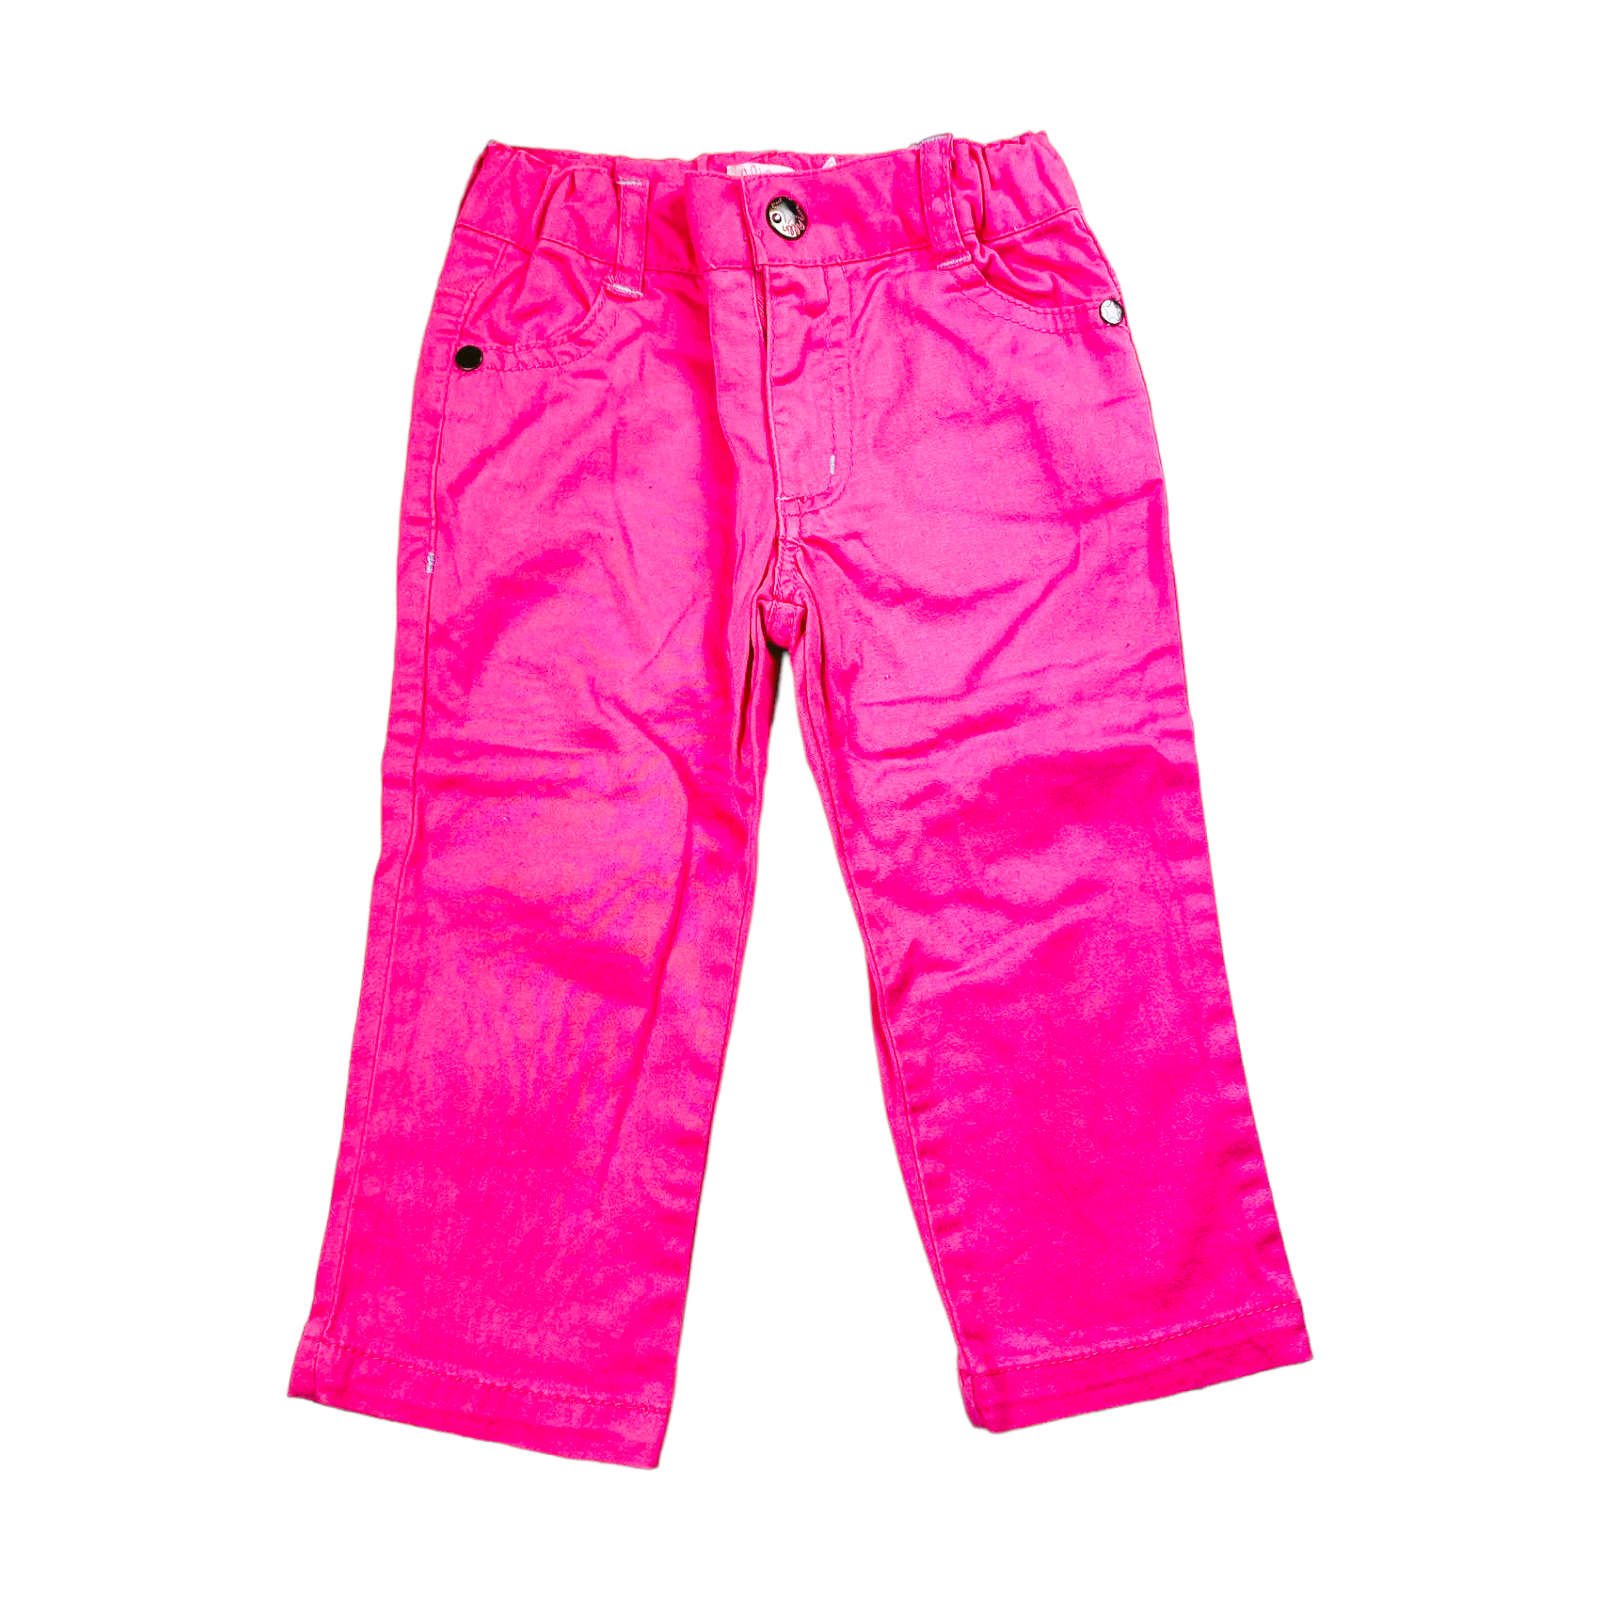 Pantalon rosado con cintura ajustable